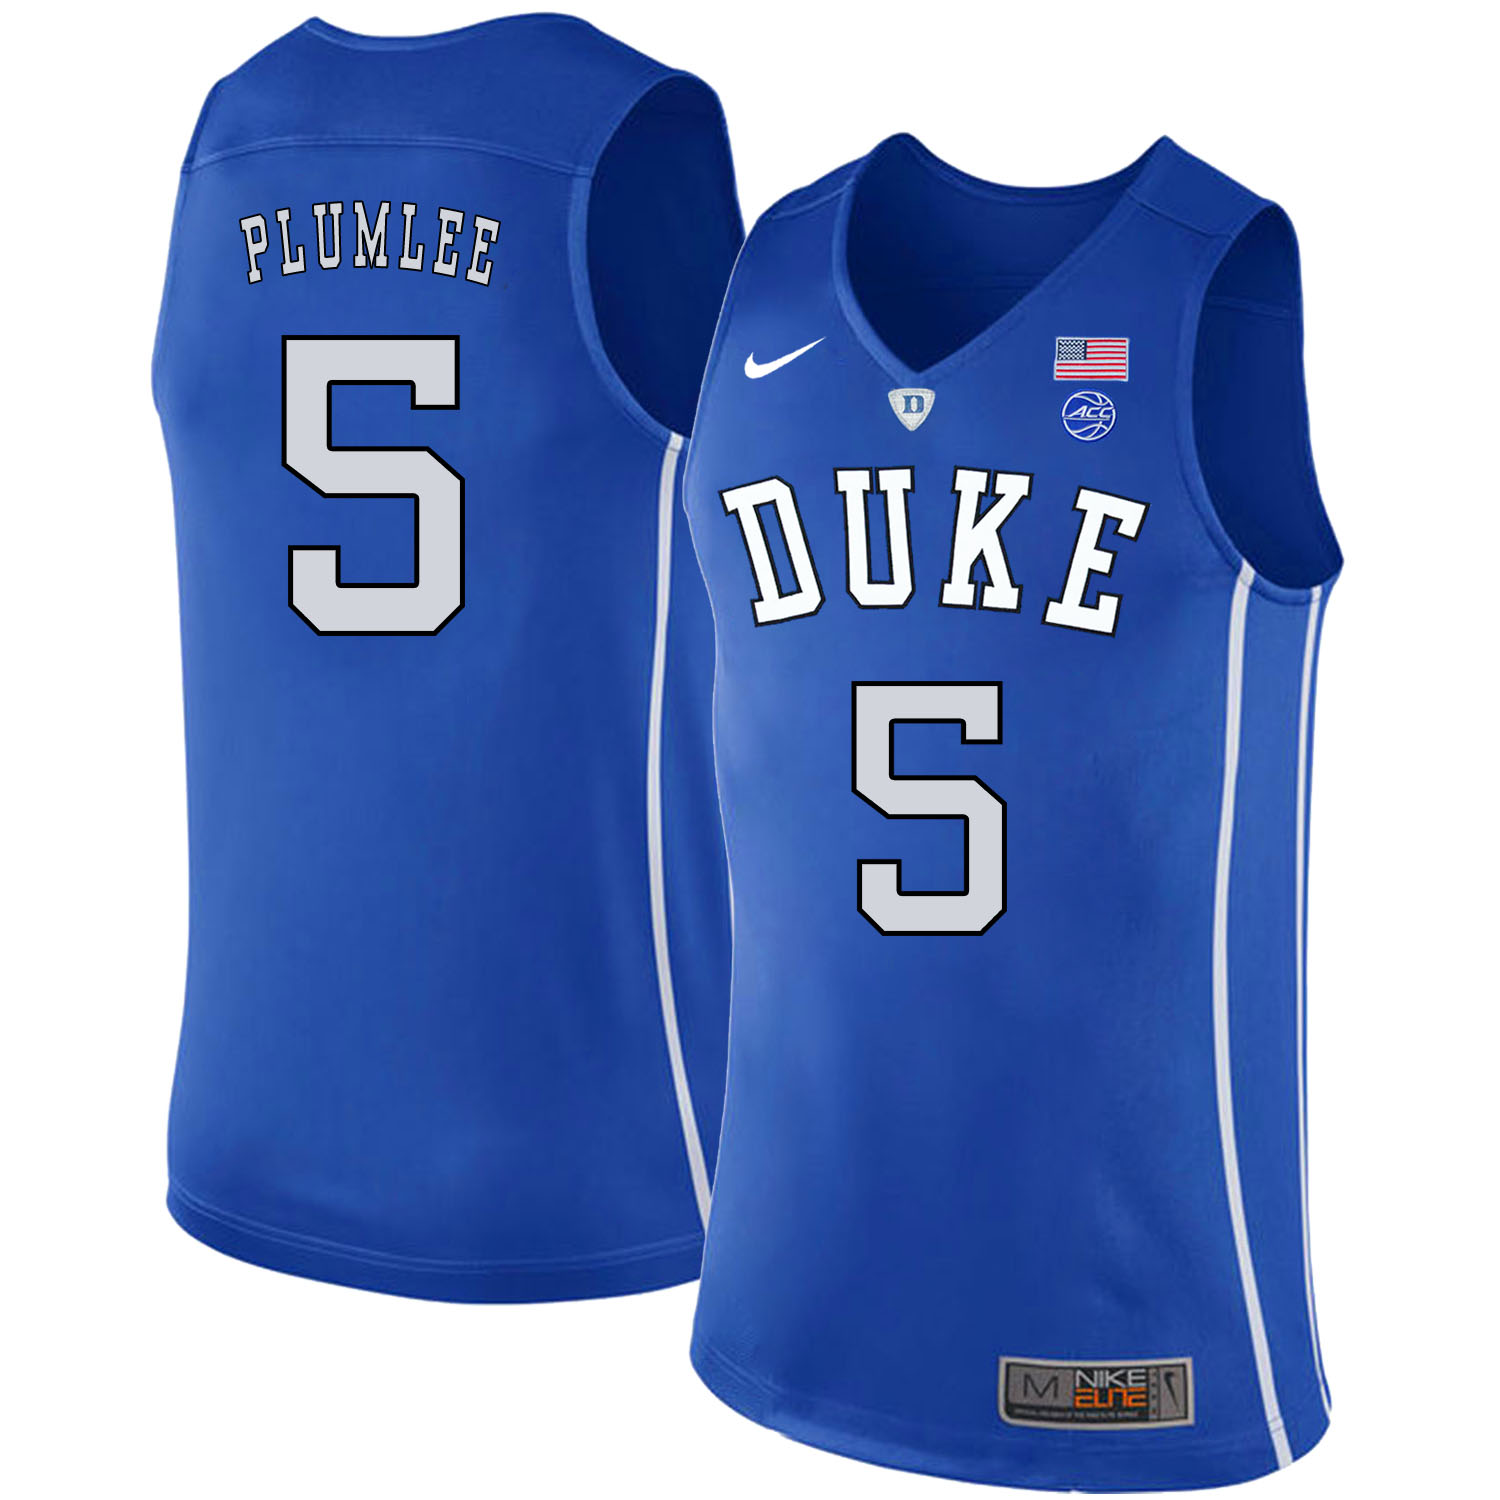 Duke Blue Devils 5 Mason Plumlee Blue Nike College Basketball Jersey